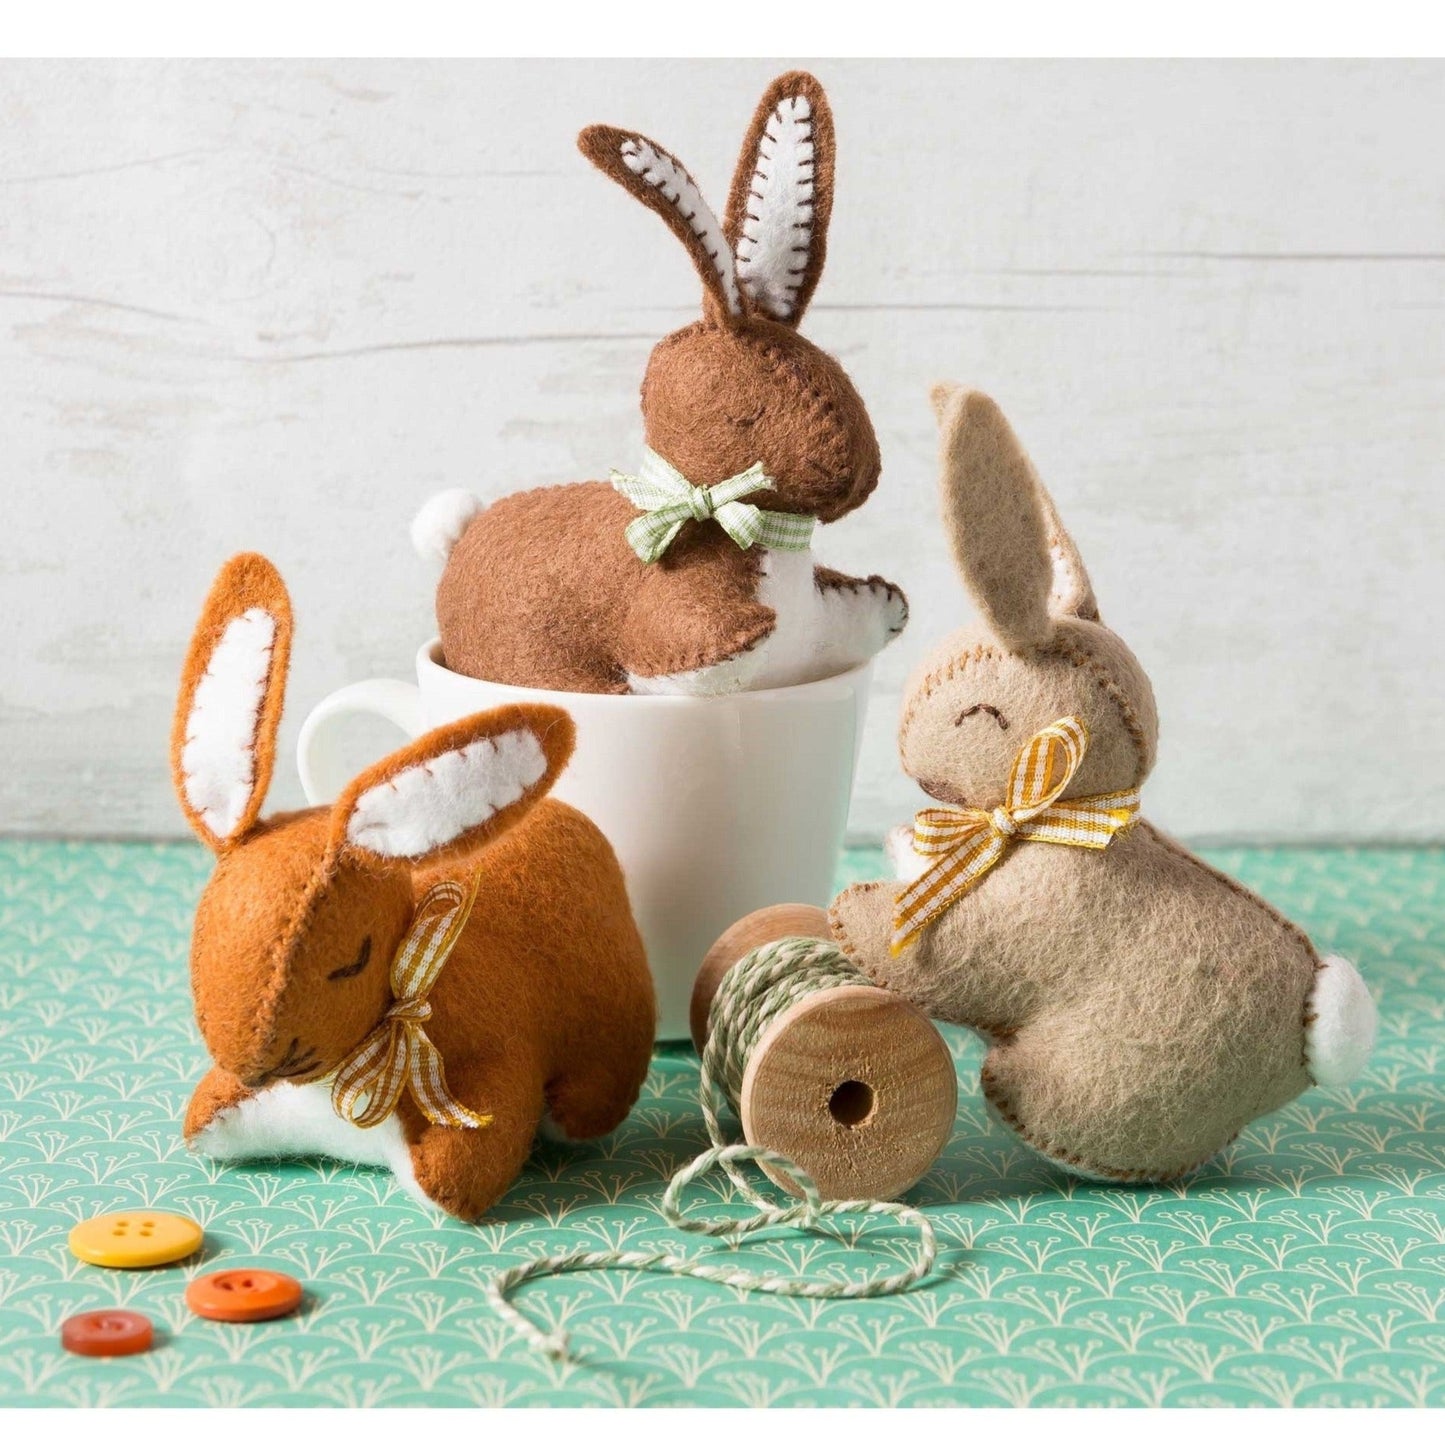 Felt Bunnies Sewing Craft Kit by Corinne Lapierre